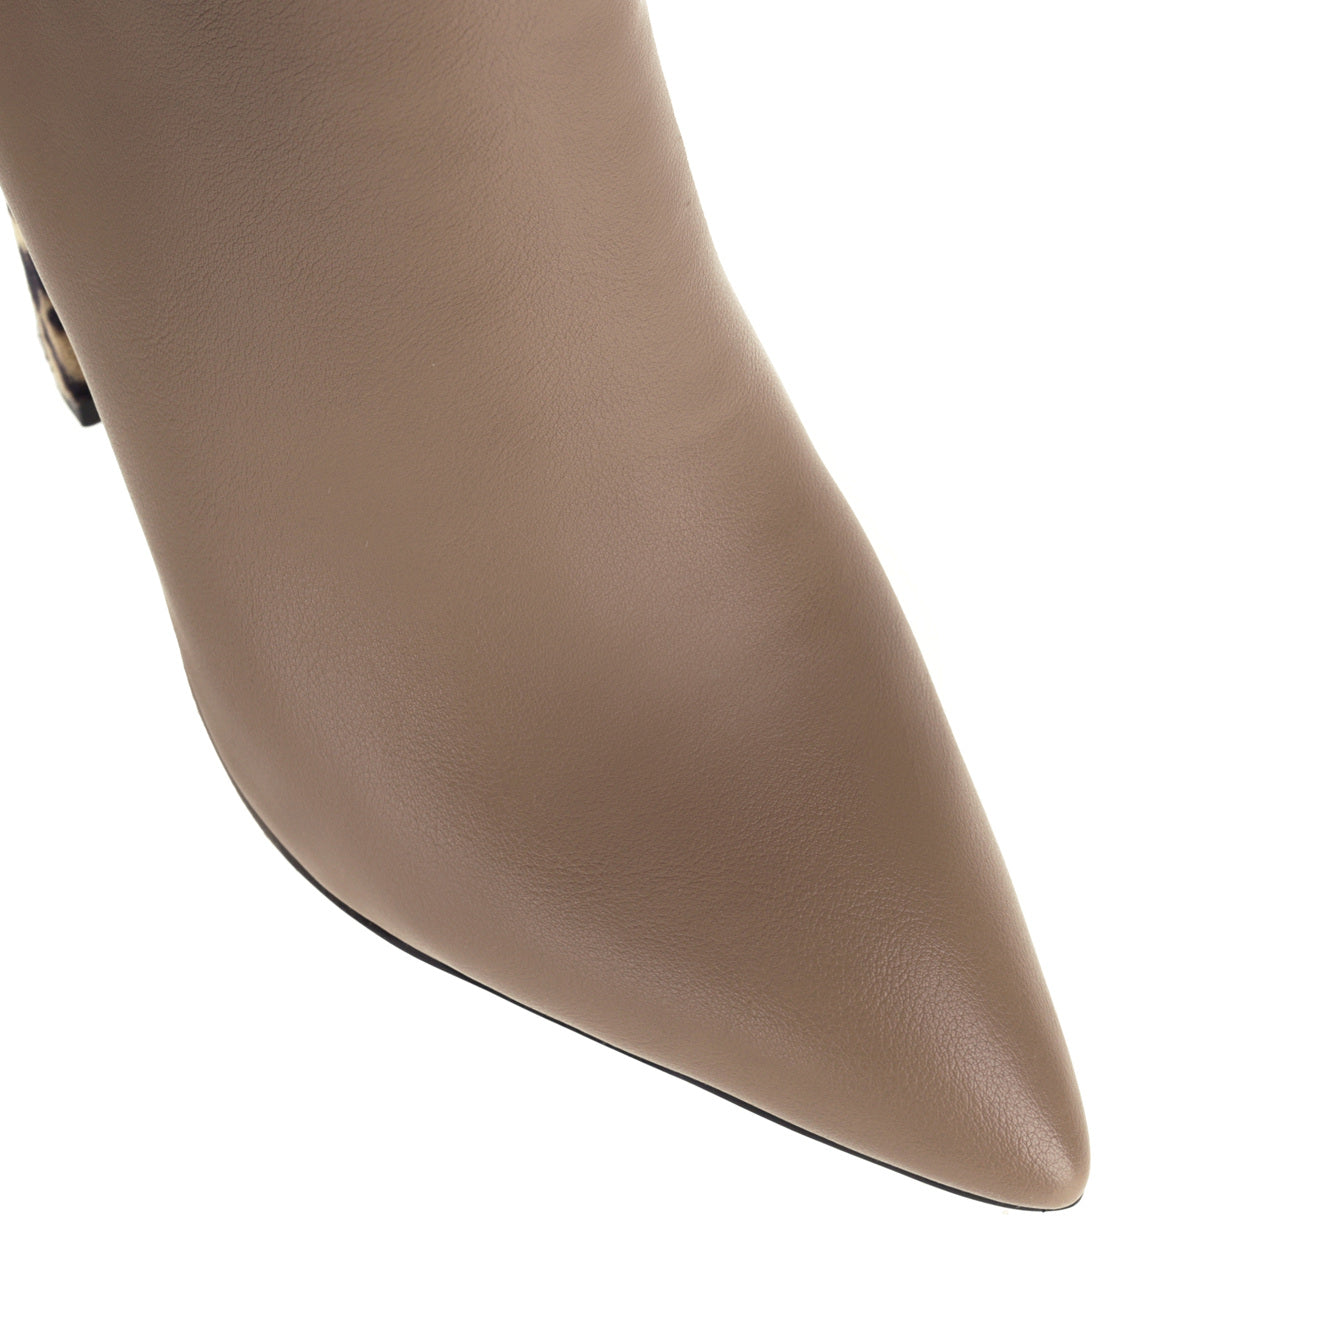 Bigsizeheels Pointed Leopard Print Block Heel Boots - Apricot freeshipping - bigsizeheel®-size5-size15 -All Plus Sizes Available!